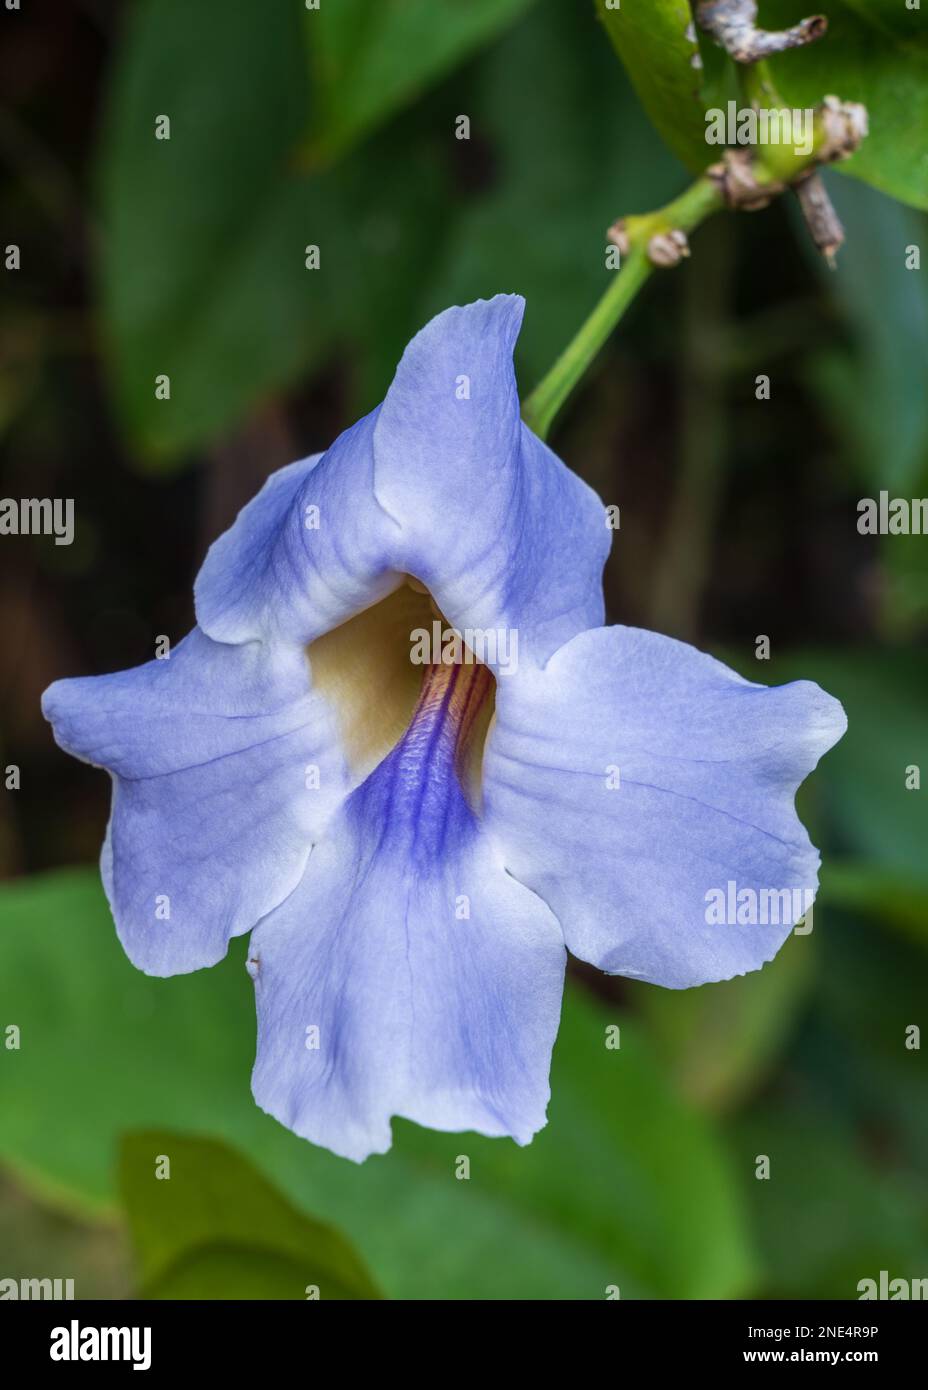 Closeup view of beautiful purple blue flower of invasive tropical ornamental species thunbergia laurifolia aka laurel clock vine or blue trumpet vine Stock Photo